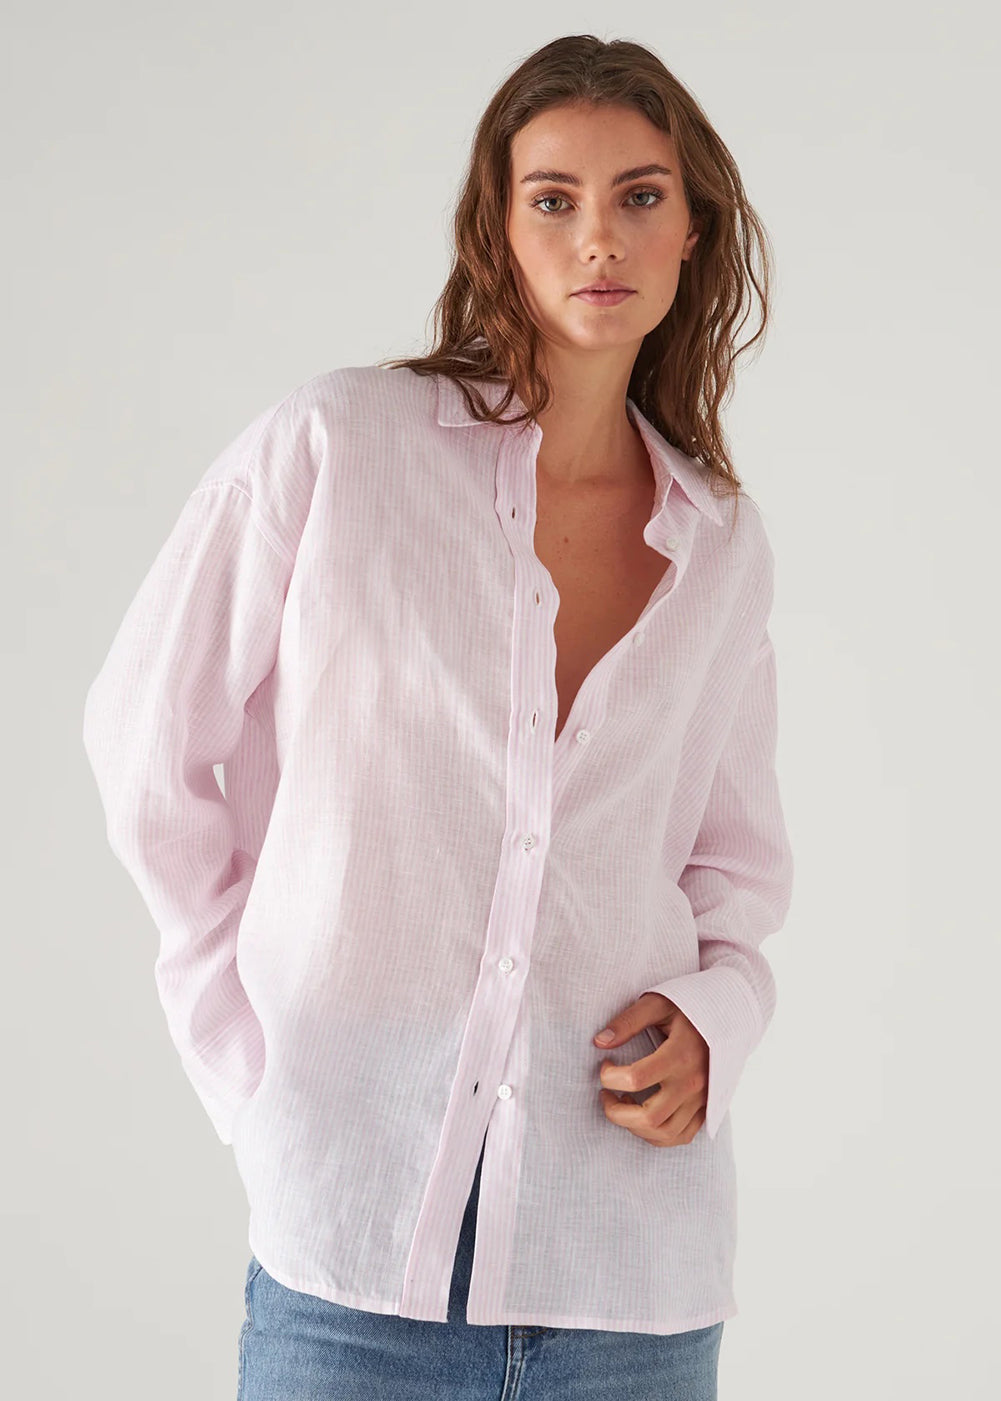 Long Sleeve Striped Linen Boyfriend Shirt - Pixie - Patrick Assaraf Canada - Danali - W4304D05X